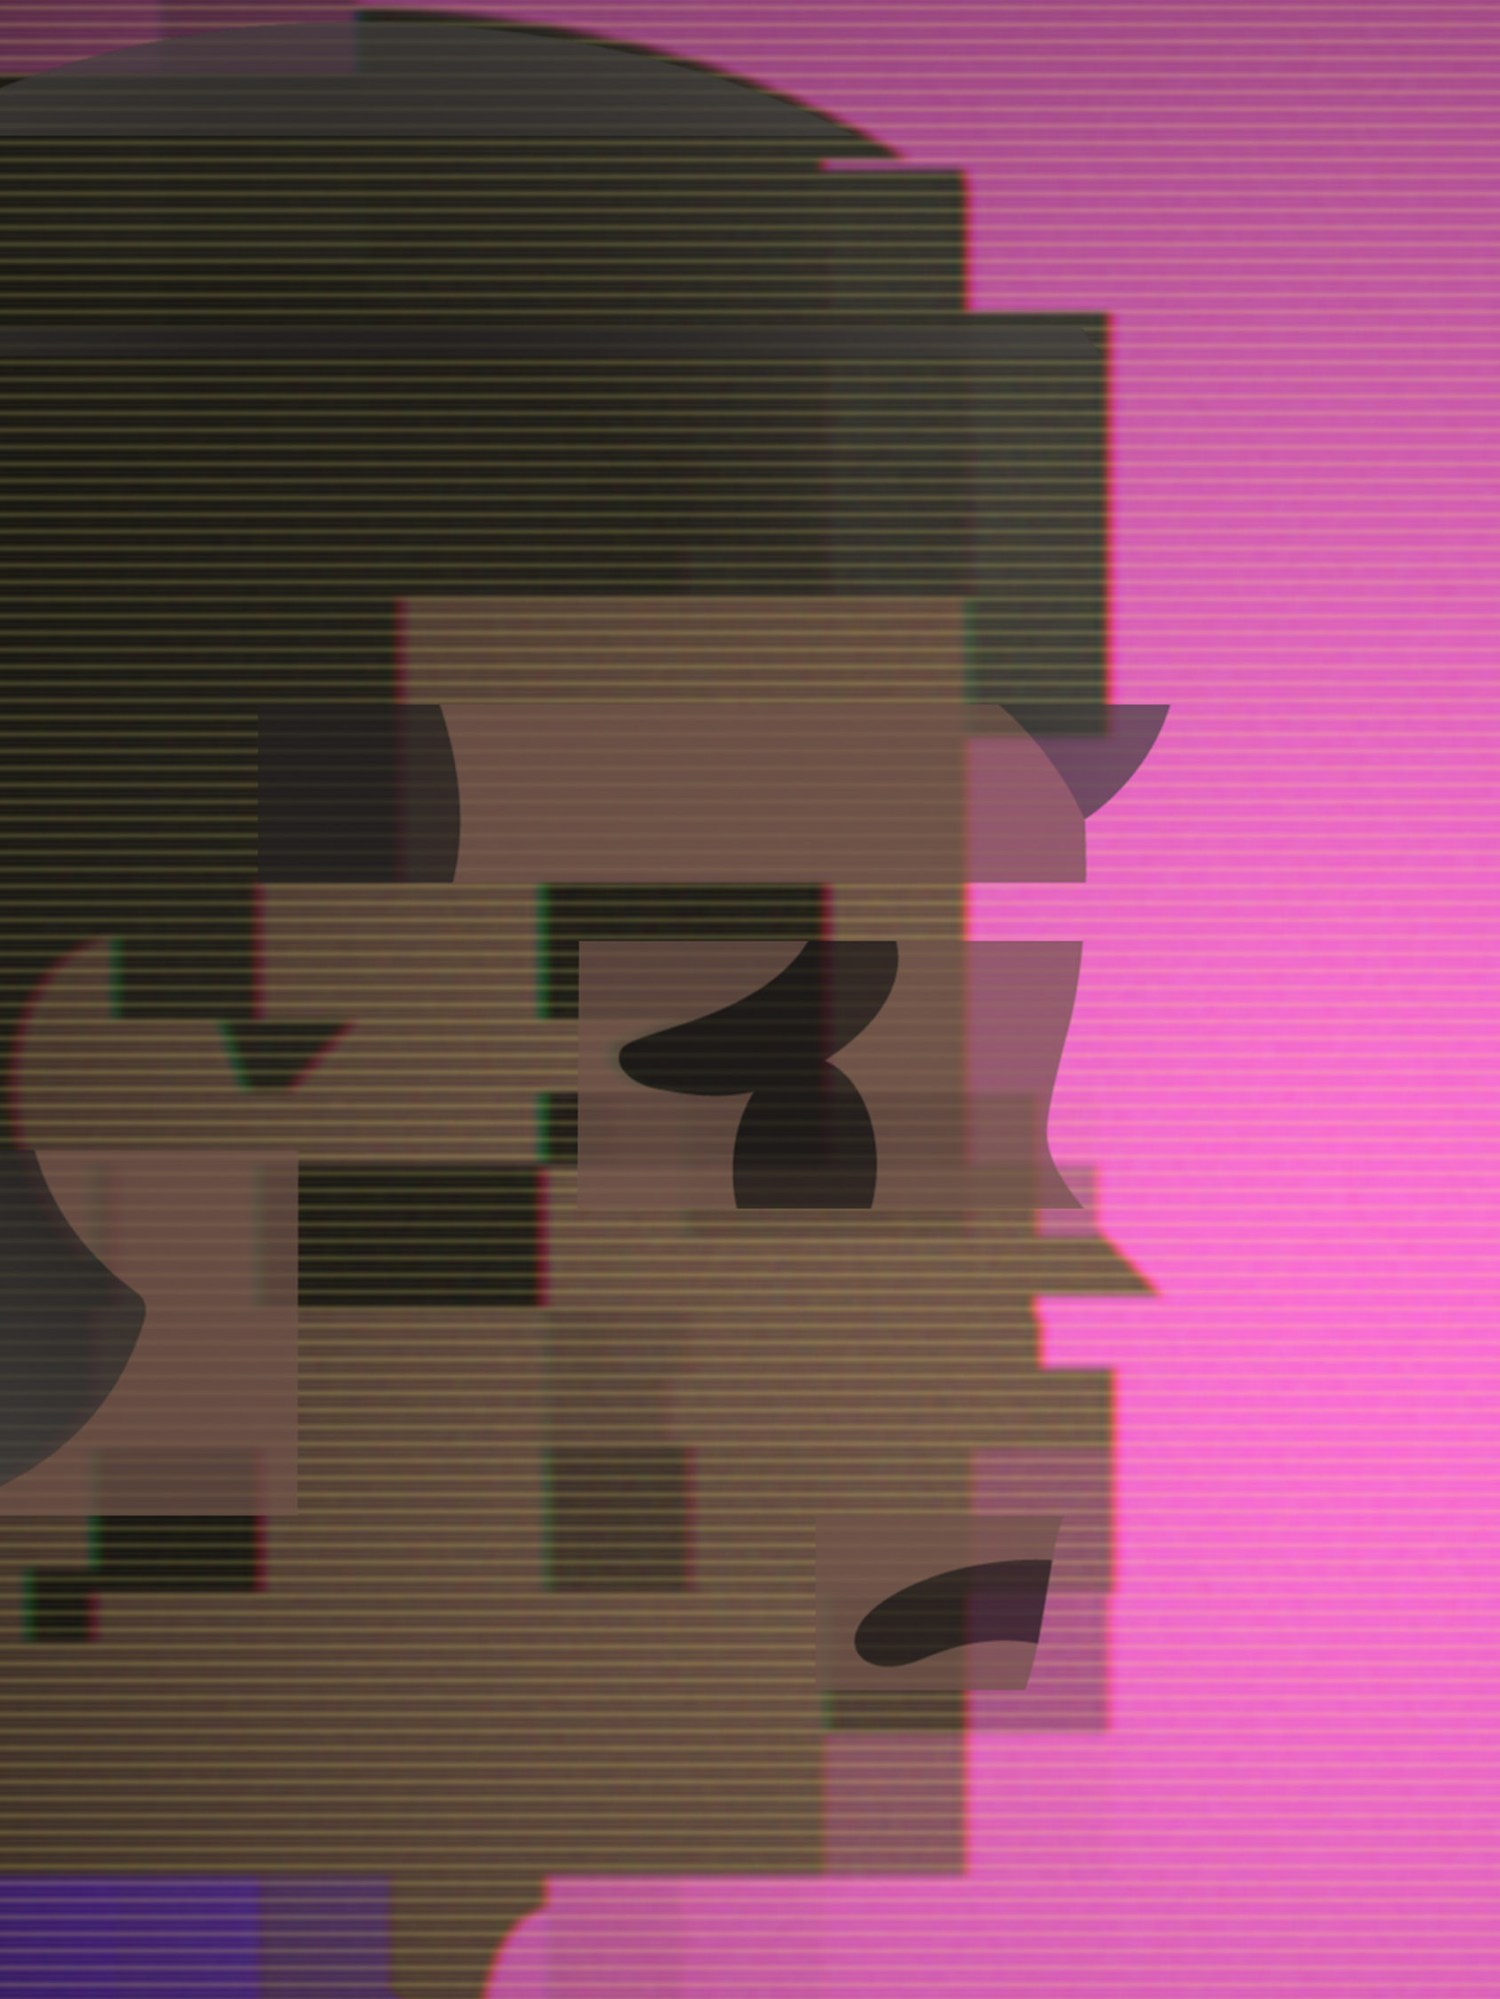 8bit pixel art of a brown-skinned person's head in profile